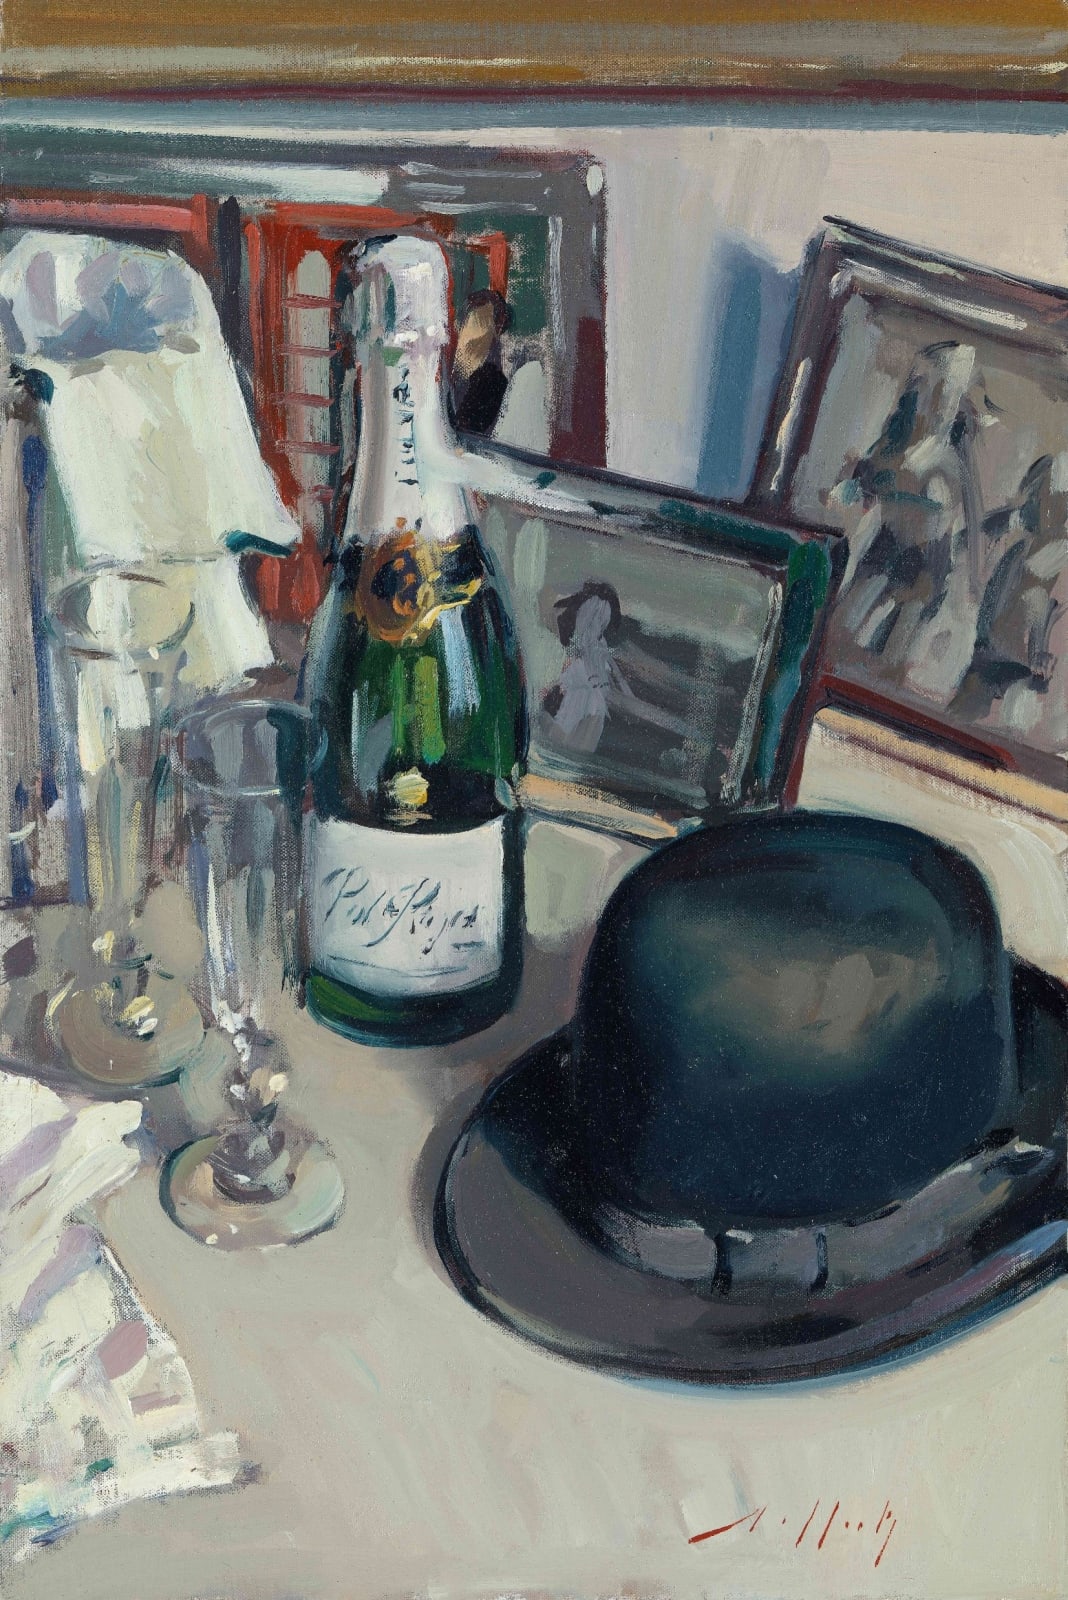 Paul Rafferty, The Bowler Hat, 2022